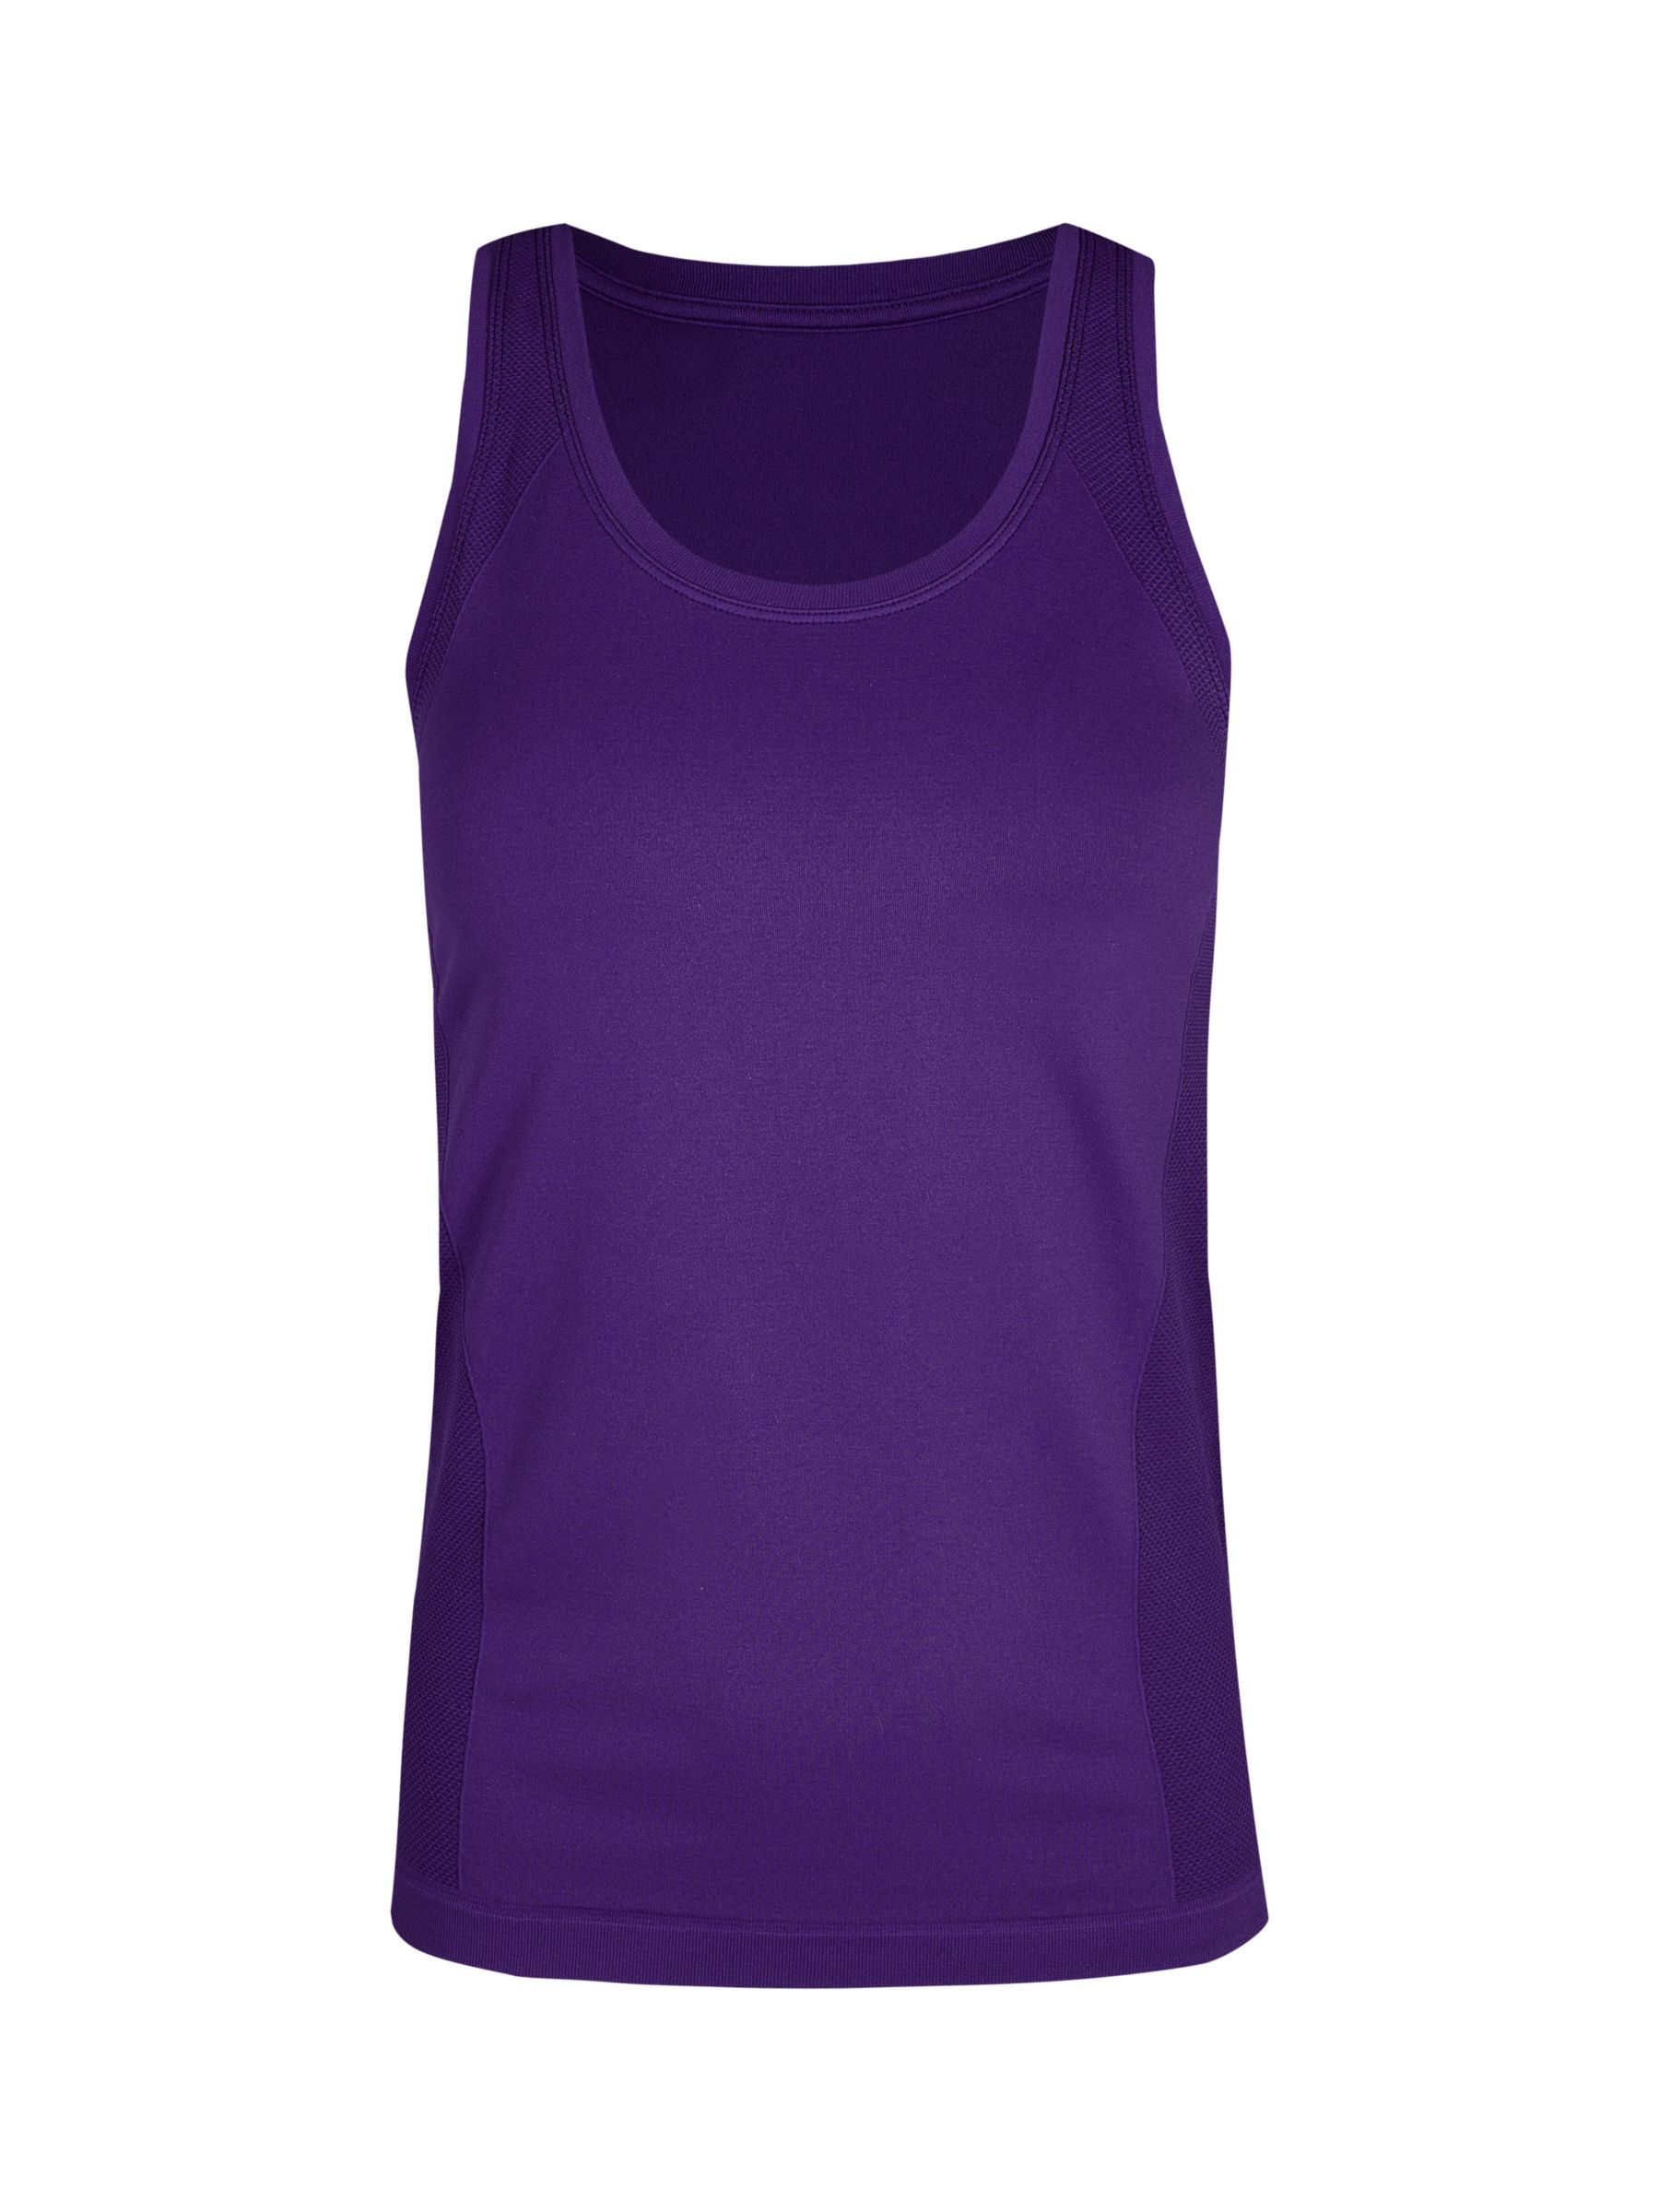 Sweaty Betty Athlete Seamless Workout Tank Top, Celestial Purple, XS